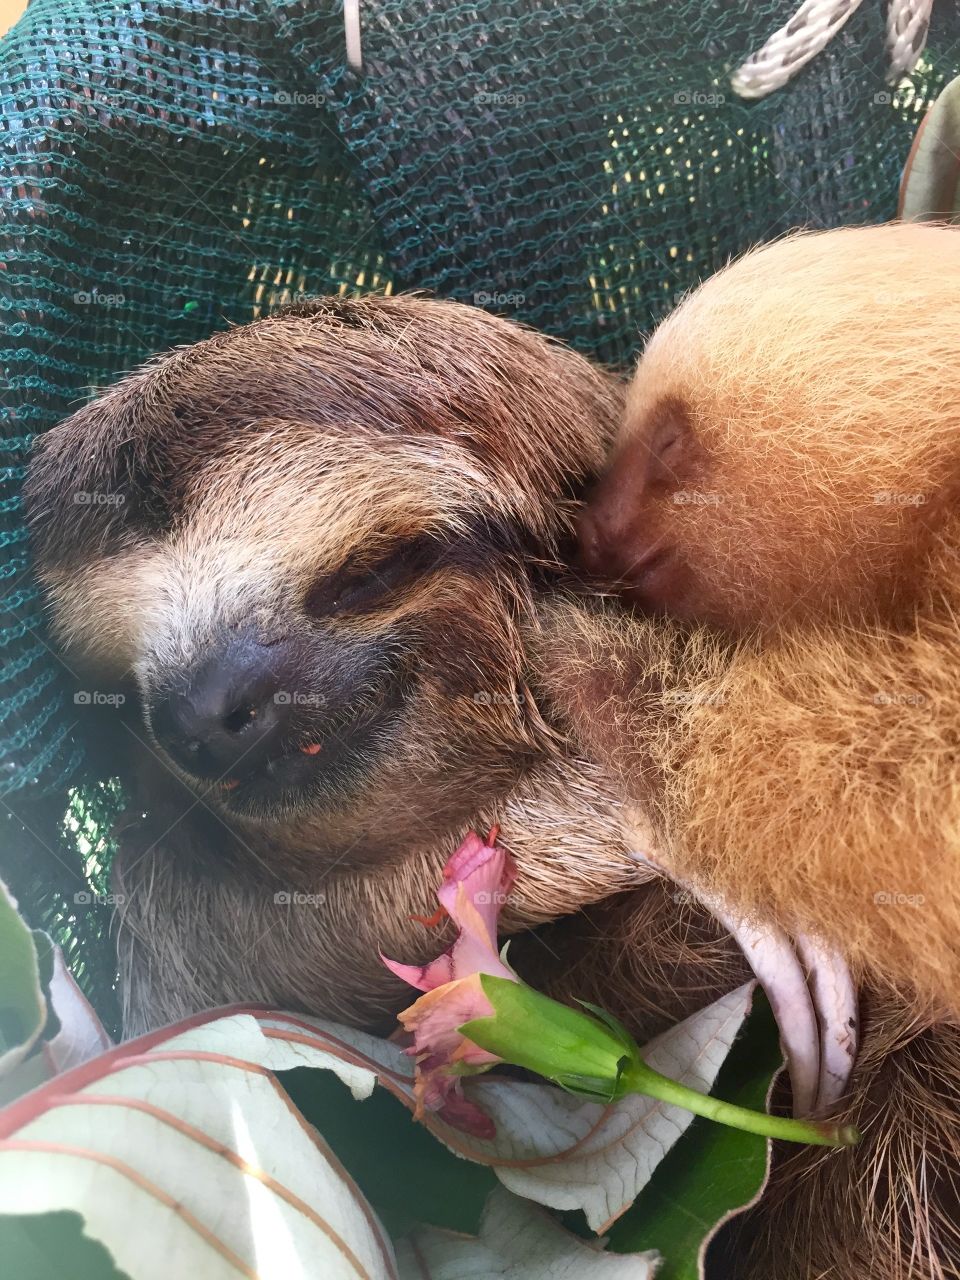 Mom and baby sloth 